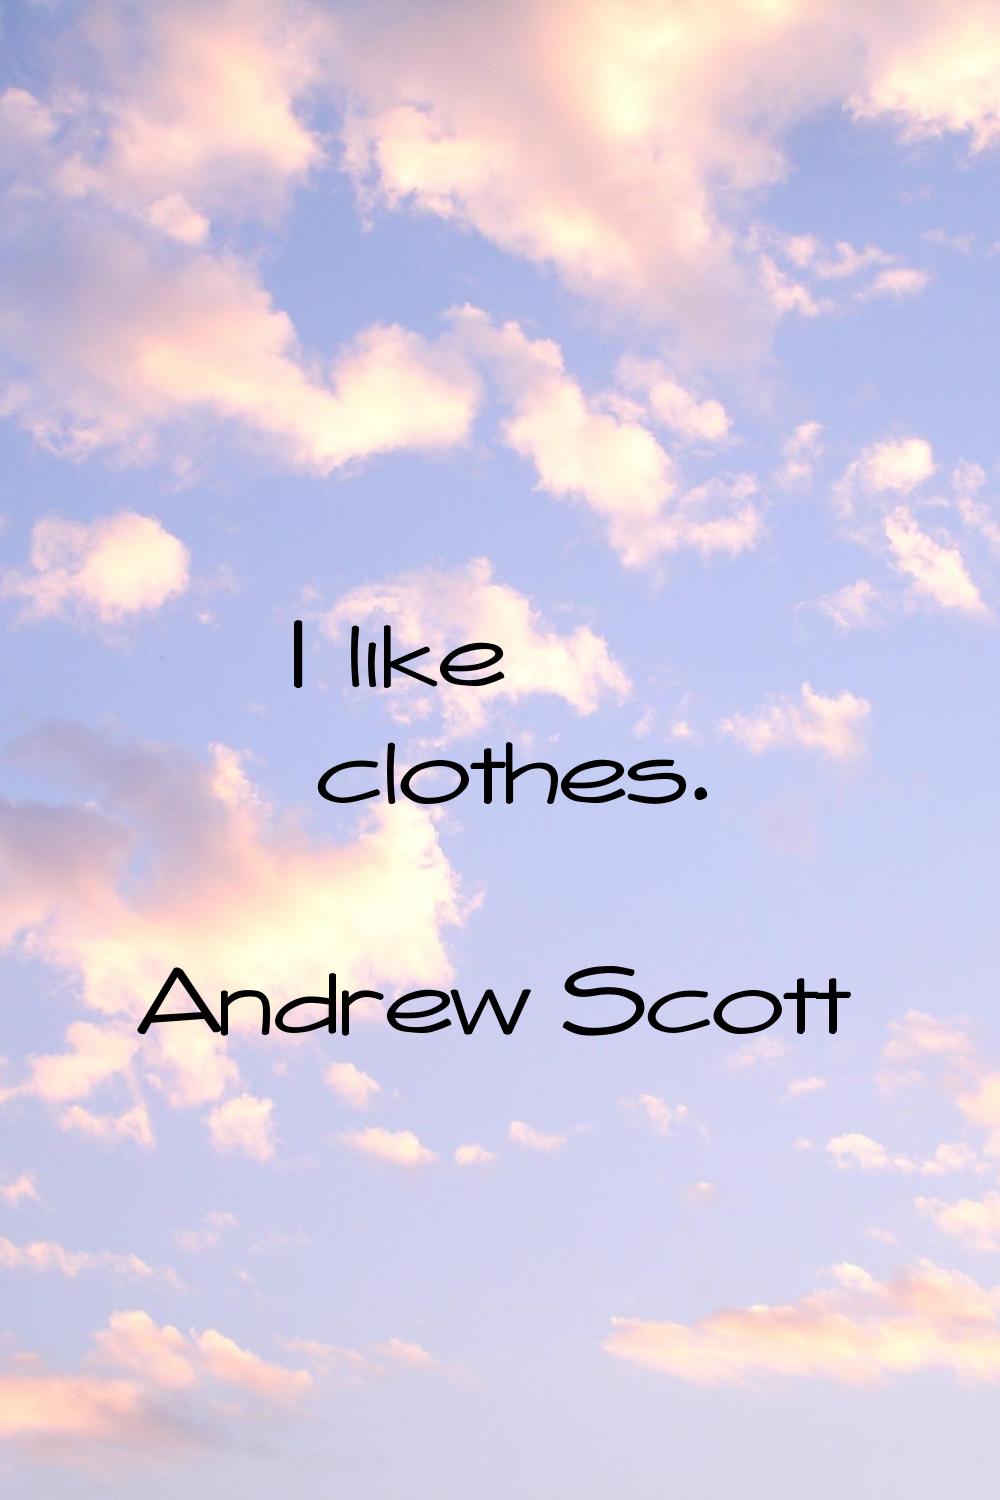 I like clothes.